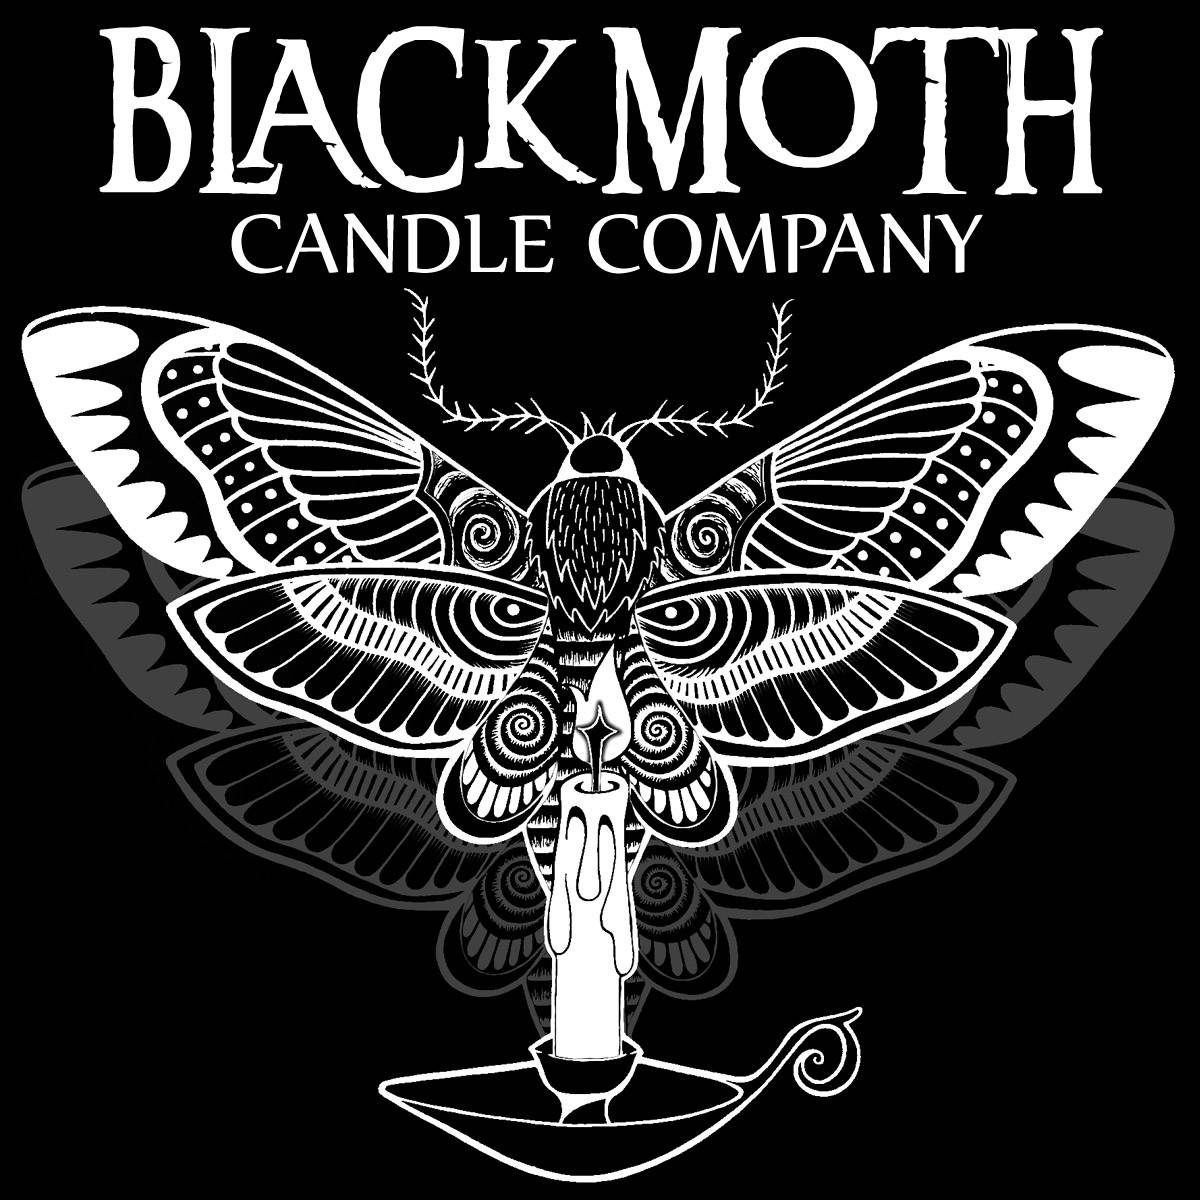 T-SHIRTS- Black Moth Candle Company T-Shirts